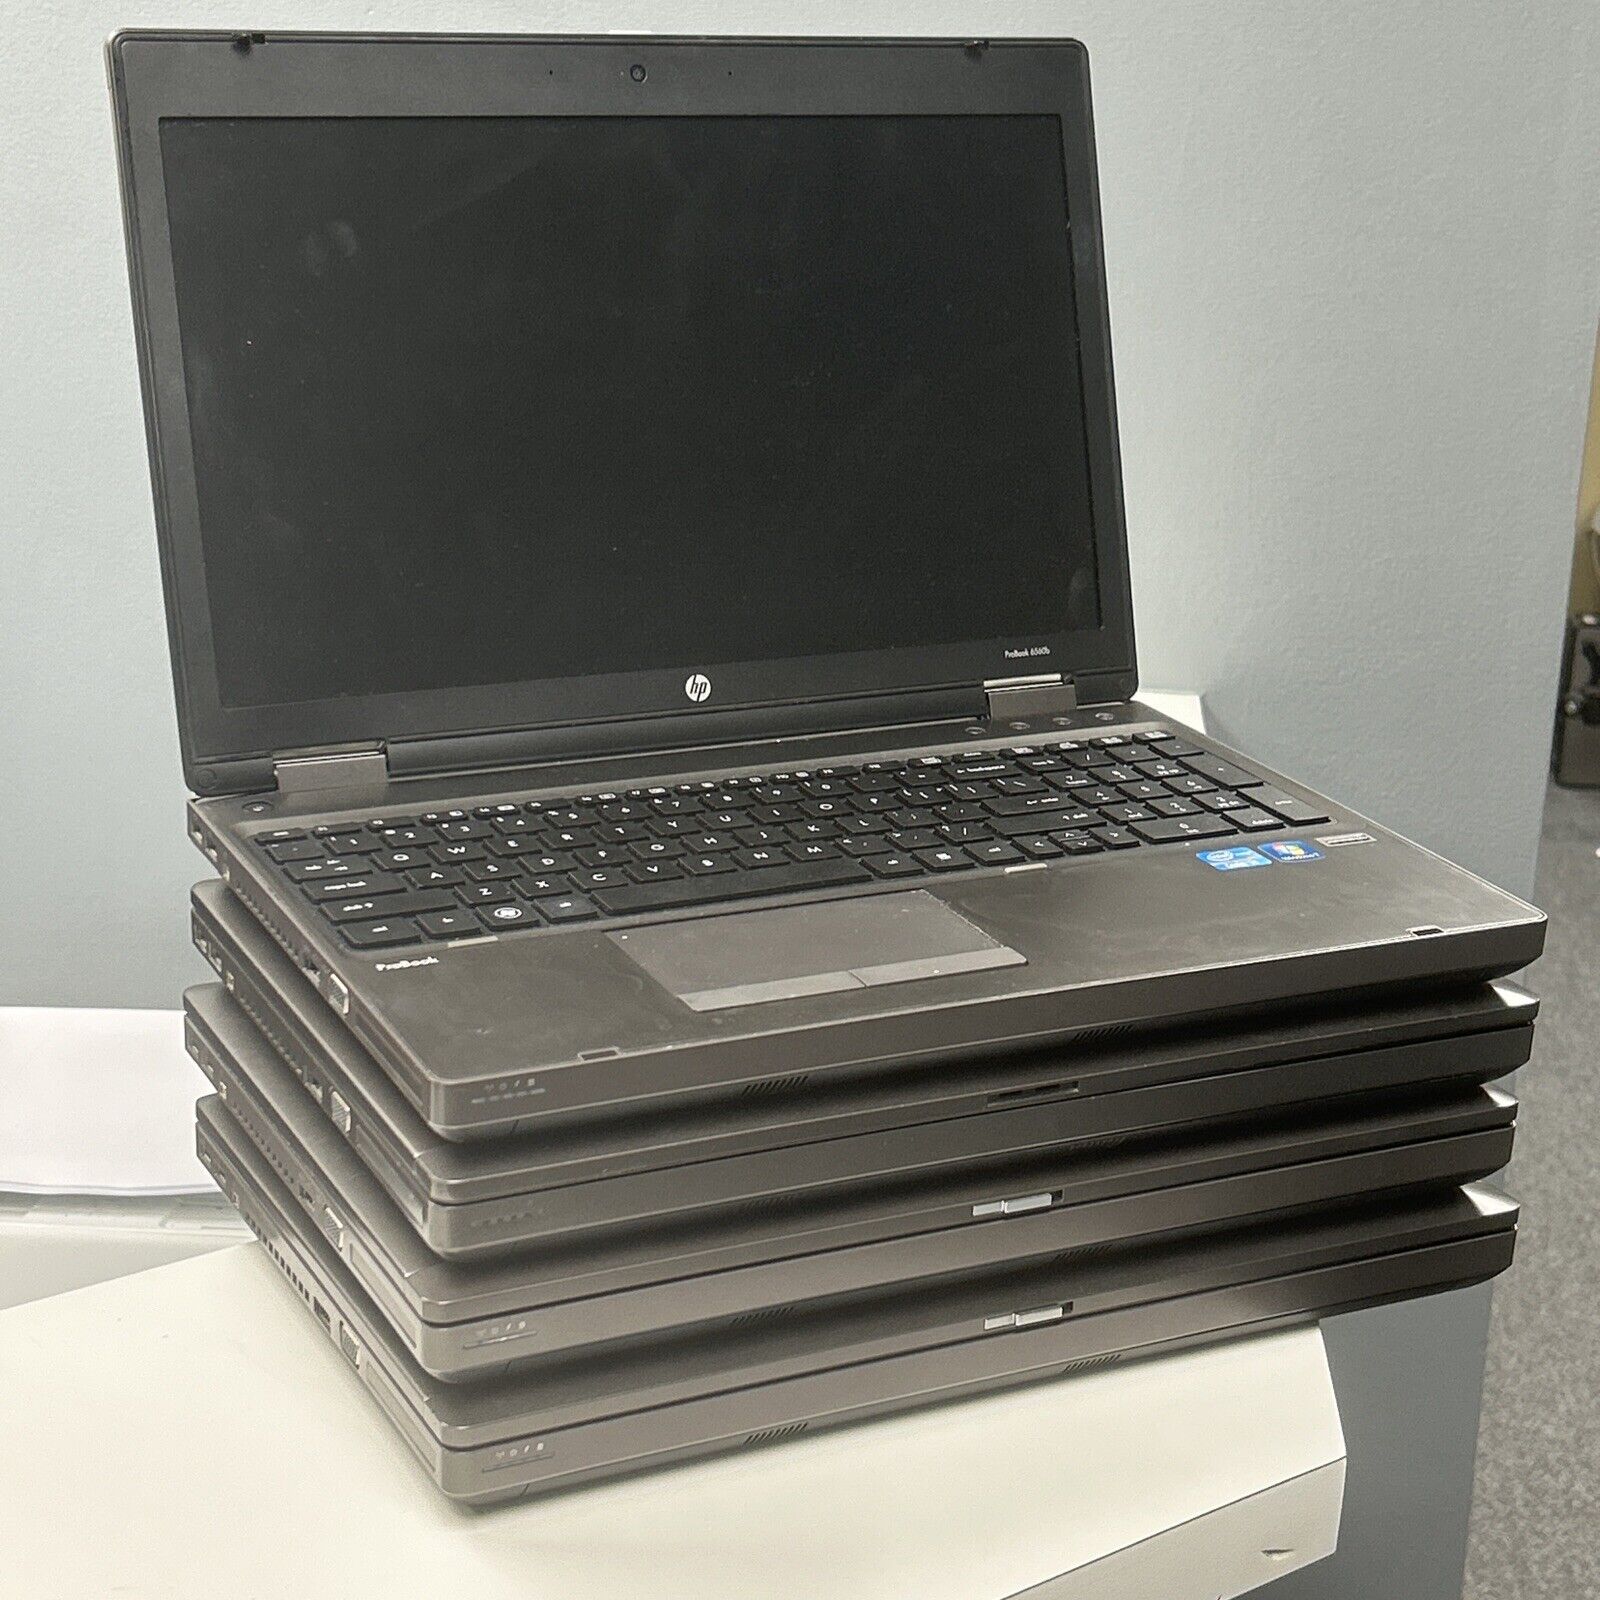 Lot of 4 HP ProBook 6560 i5 Laptops No HDD, No OS, NO RAM For Parts or Repair